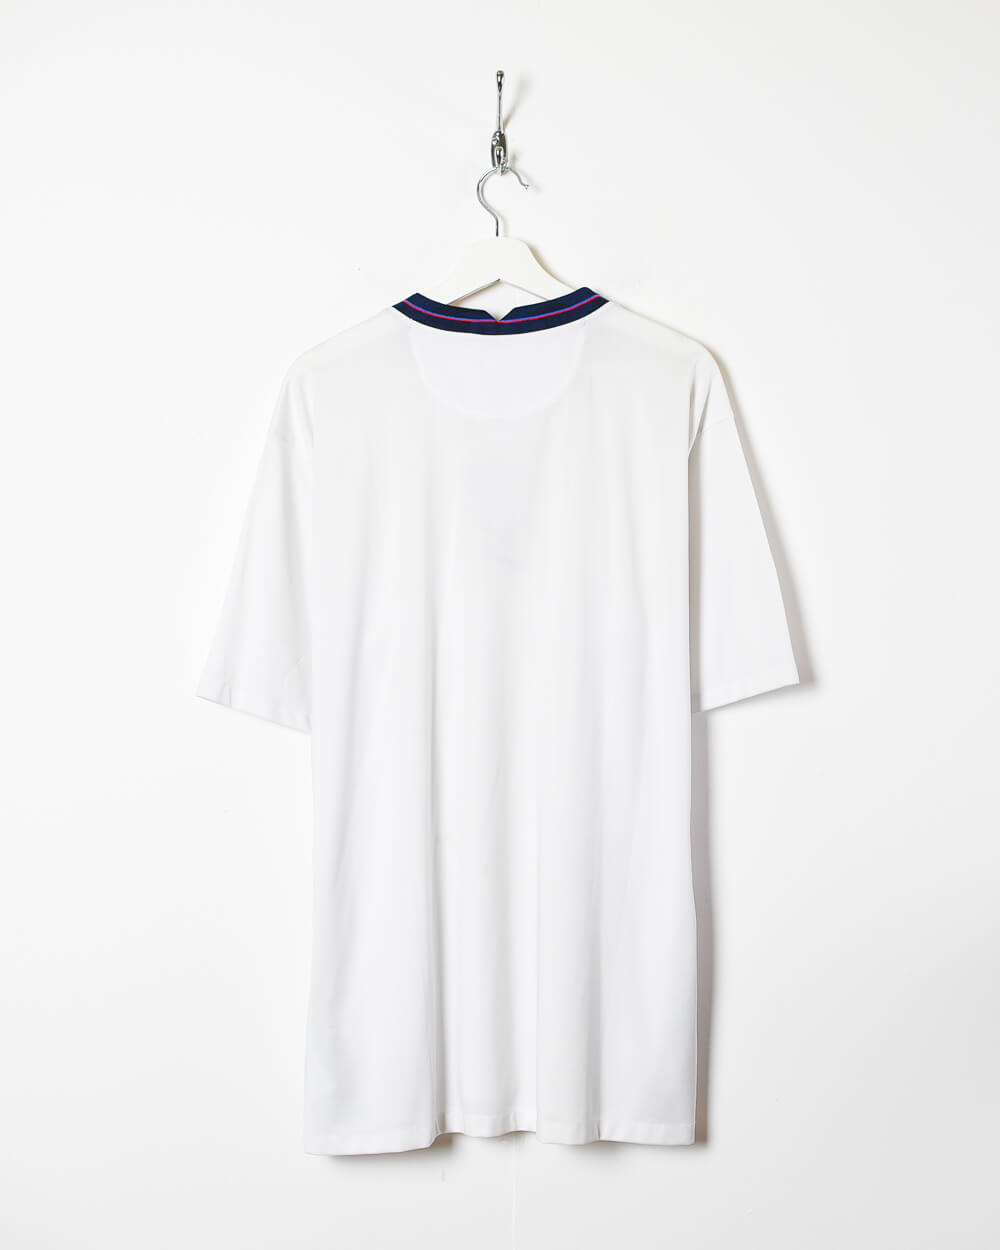 White Nike 2020 England Home Shirt - XX-Large